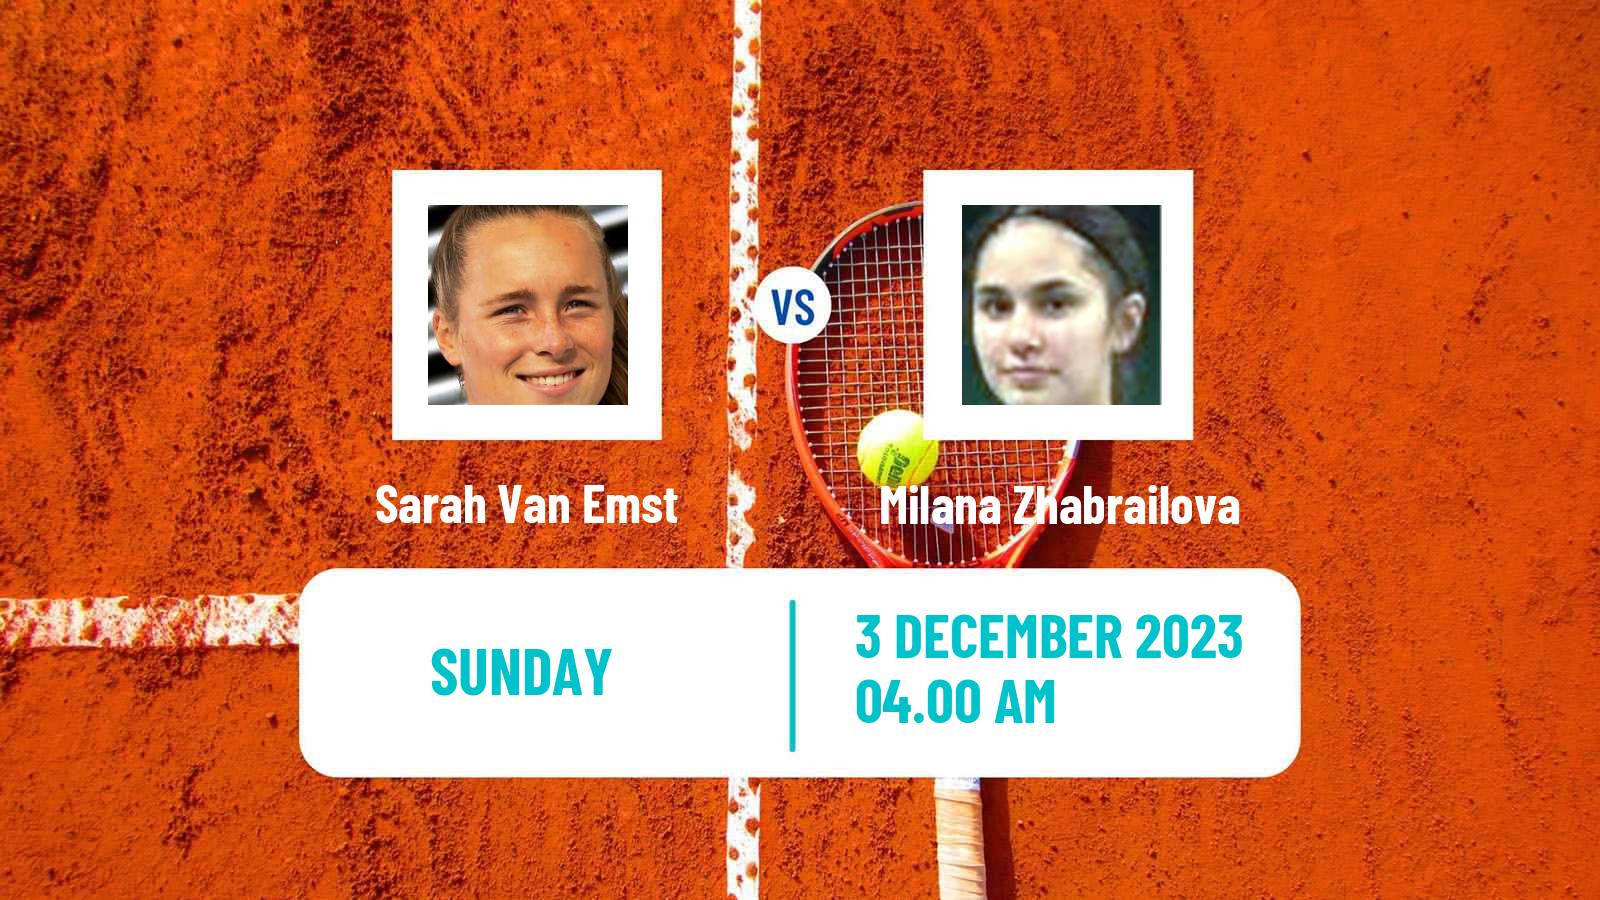 Tennis ITF W15 Monastir 42 Women Sarah Van Emst - Milana Zhabrailova